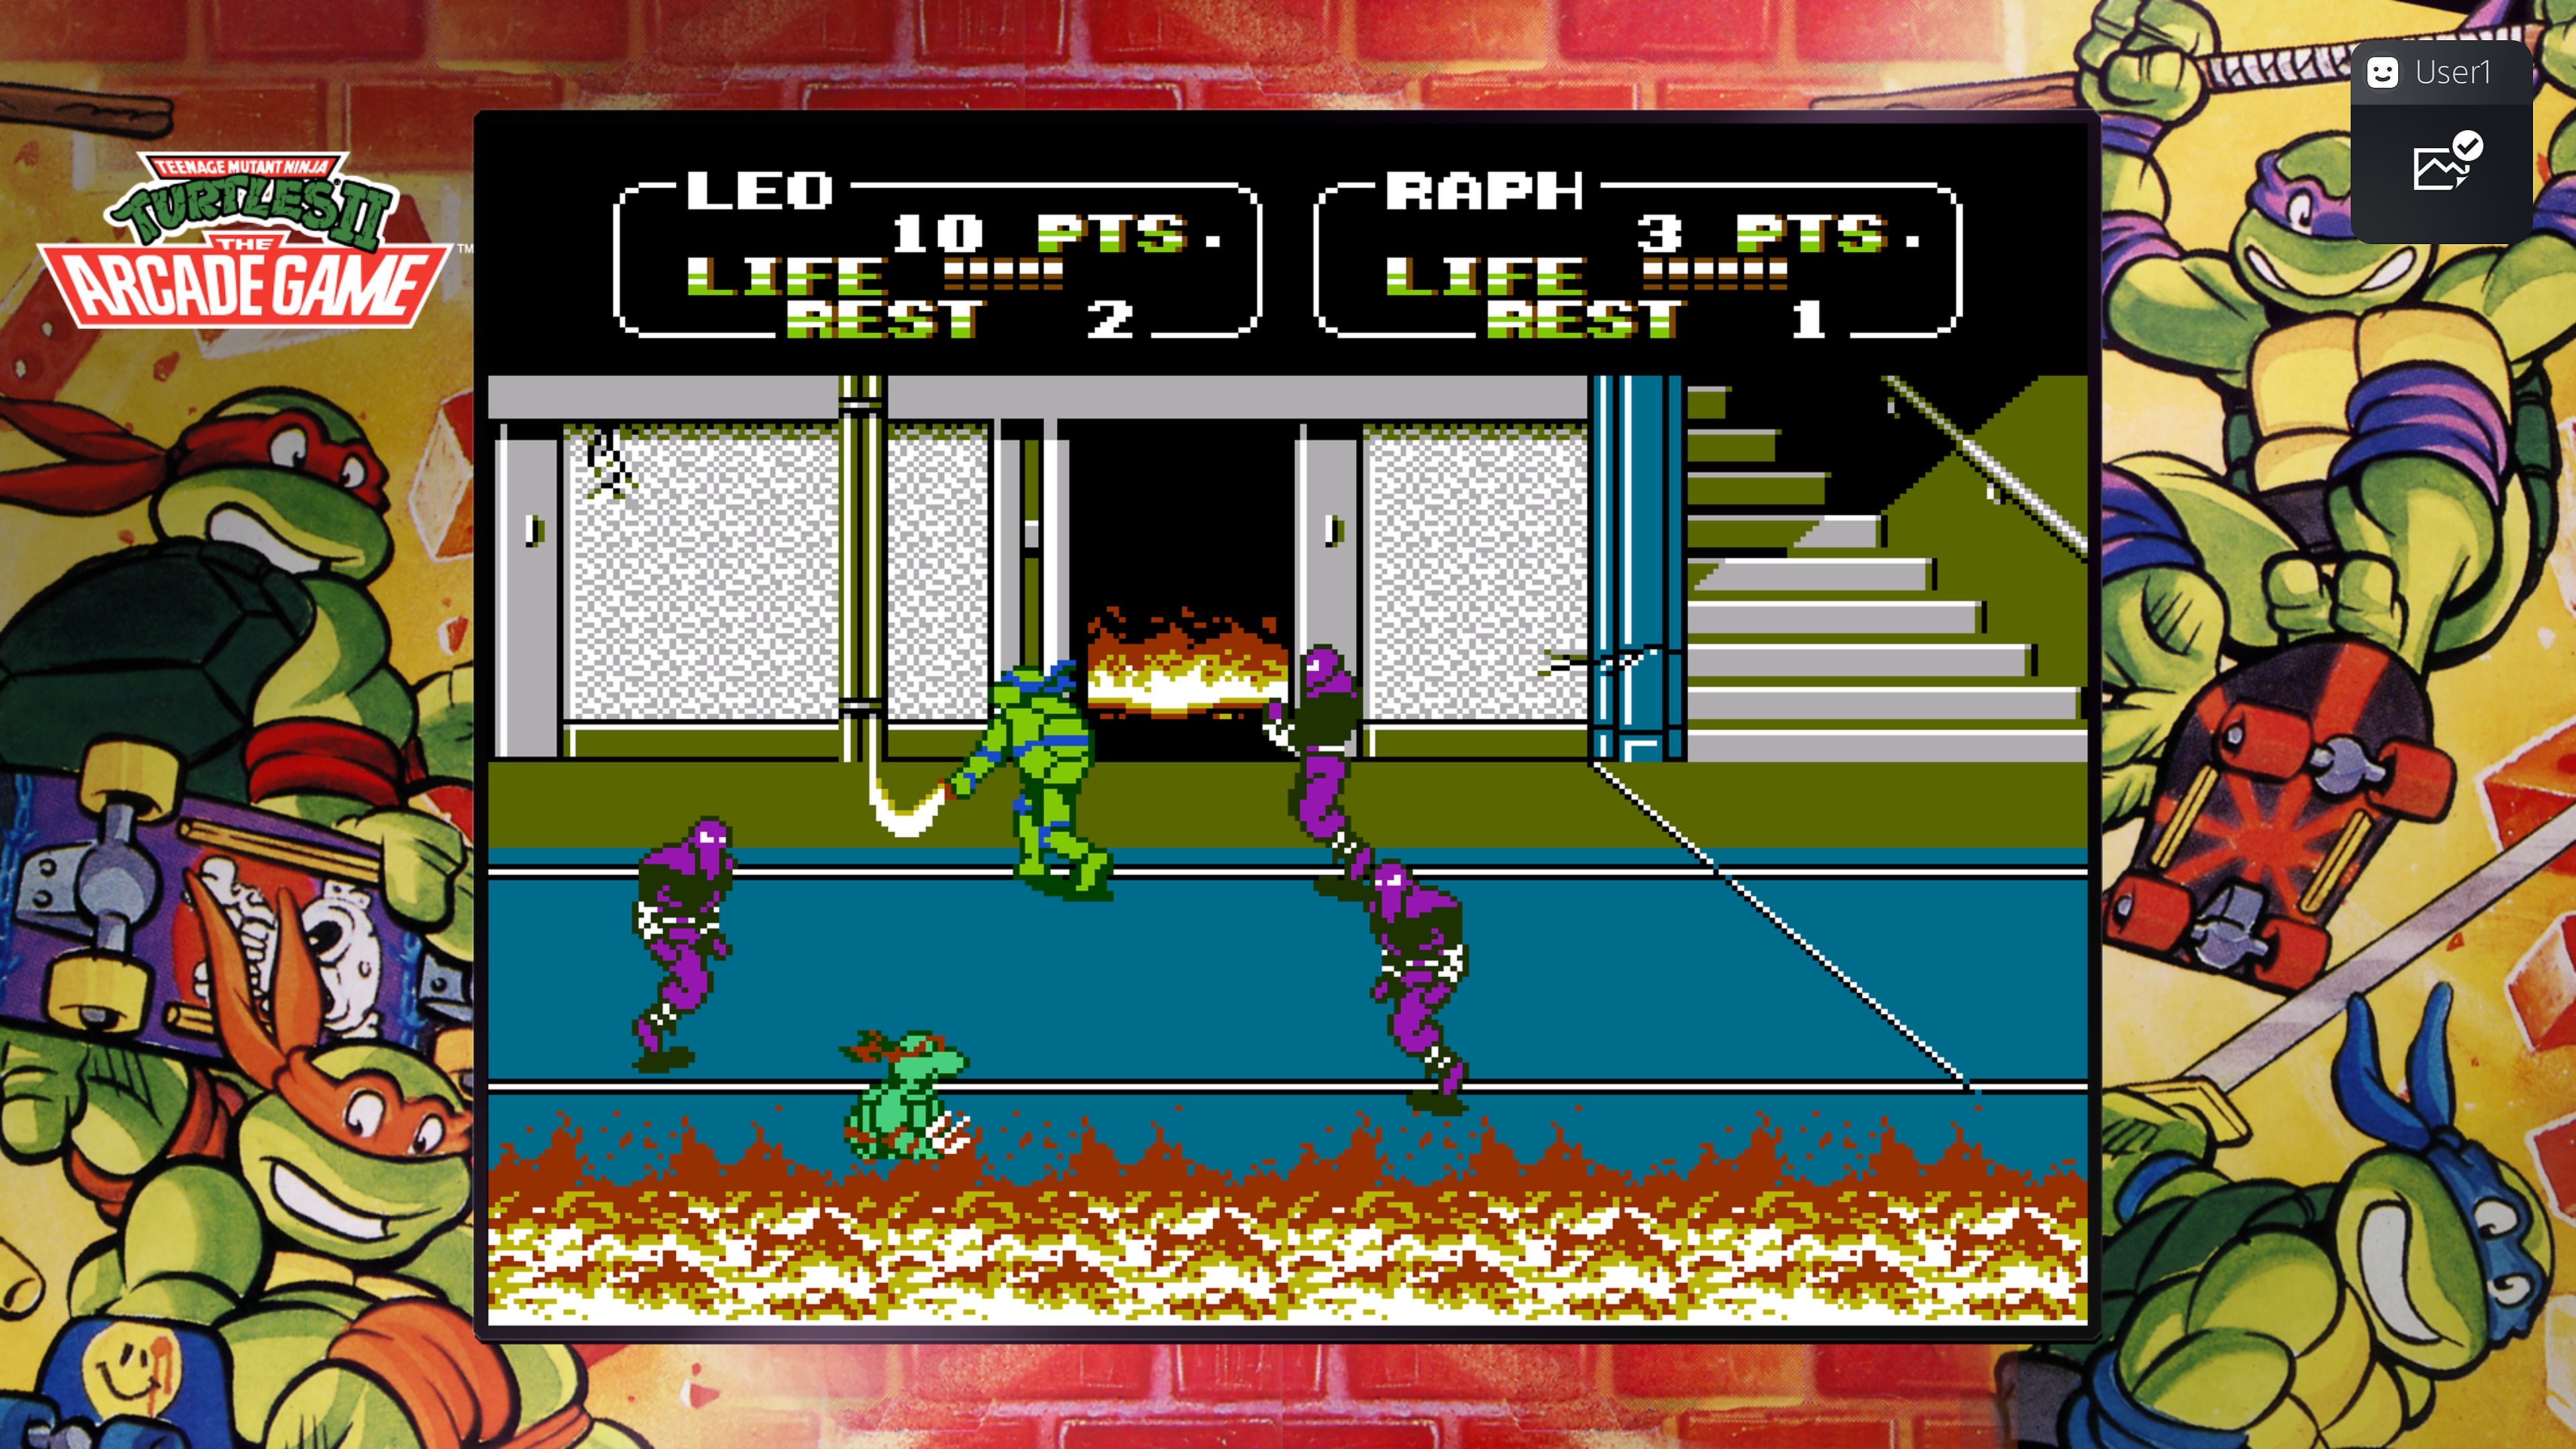 Teenage Mutant Ninja Turtles Collection - The Arcade Game -kuvakaappaus: Leonardo ja Raphael taistelevat Jalkaklaania vastaan